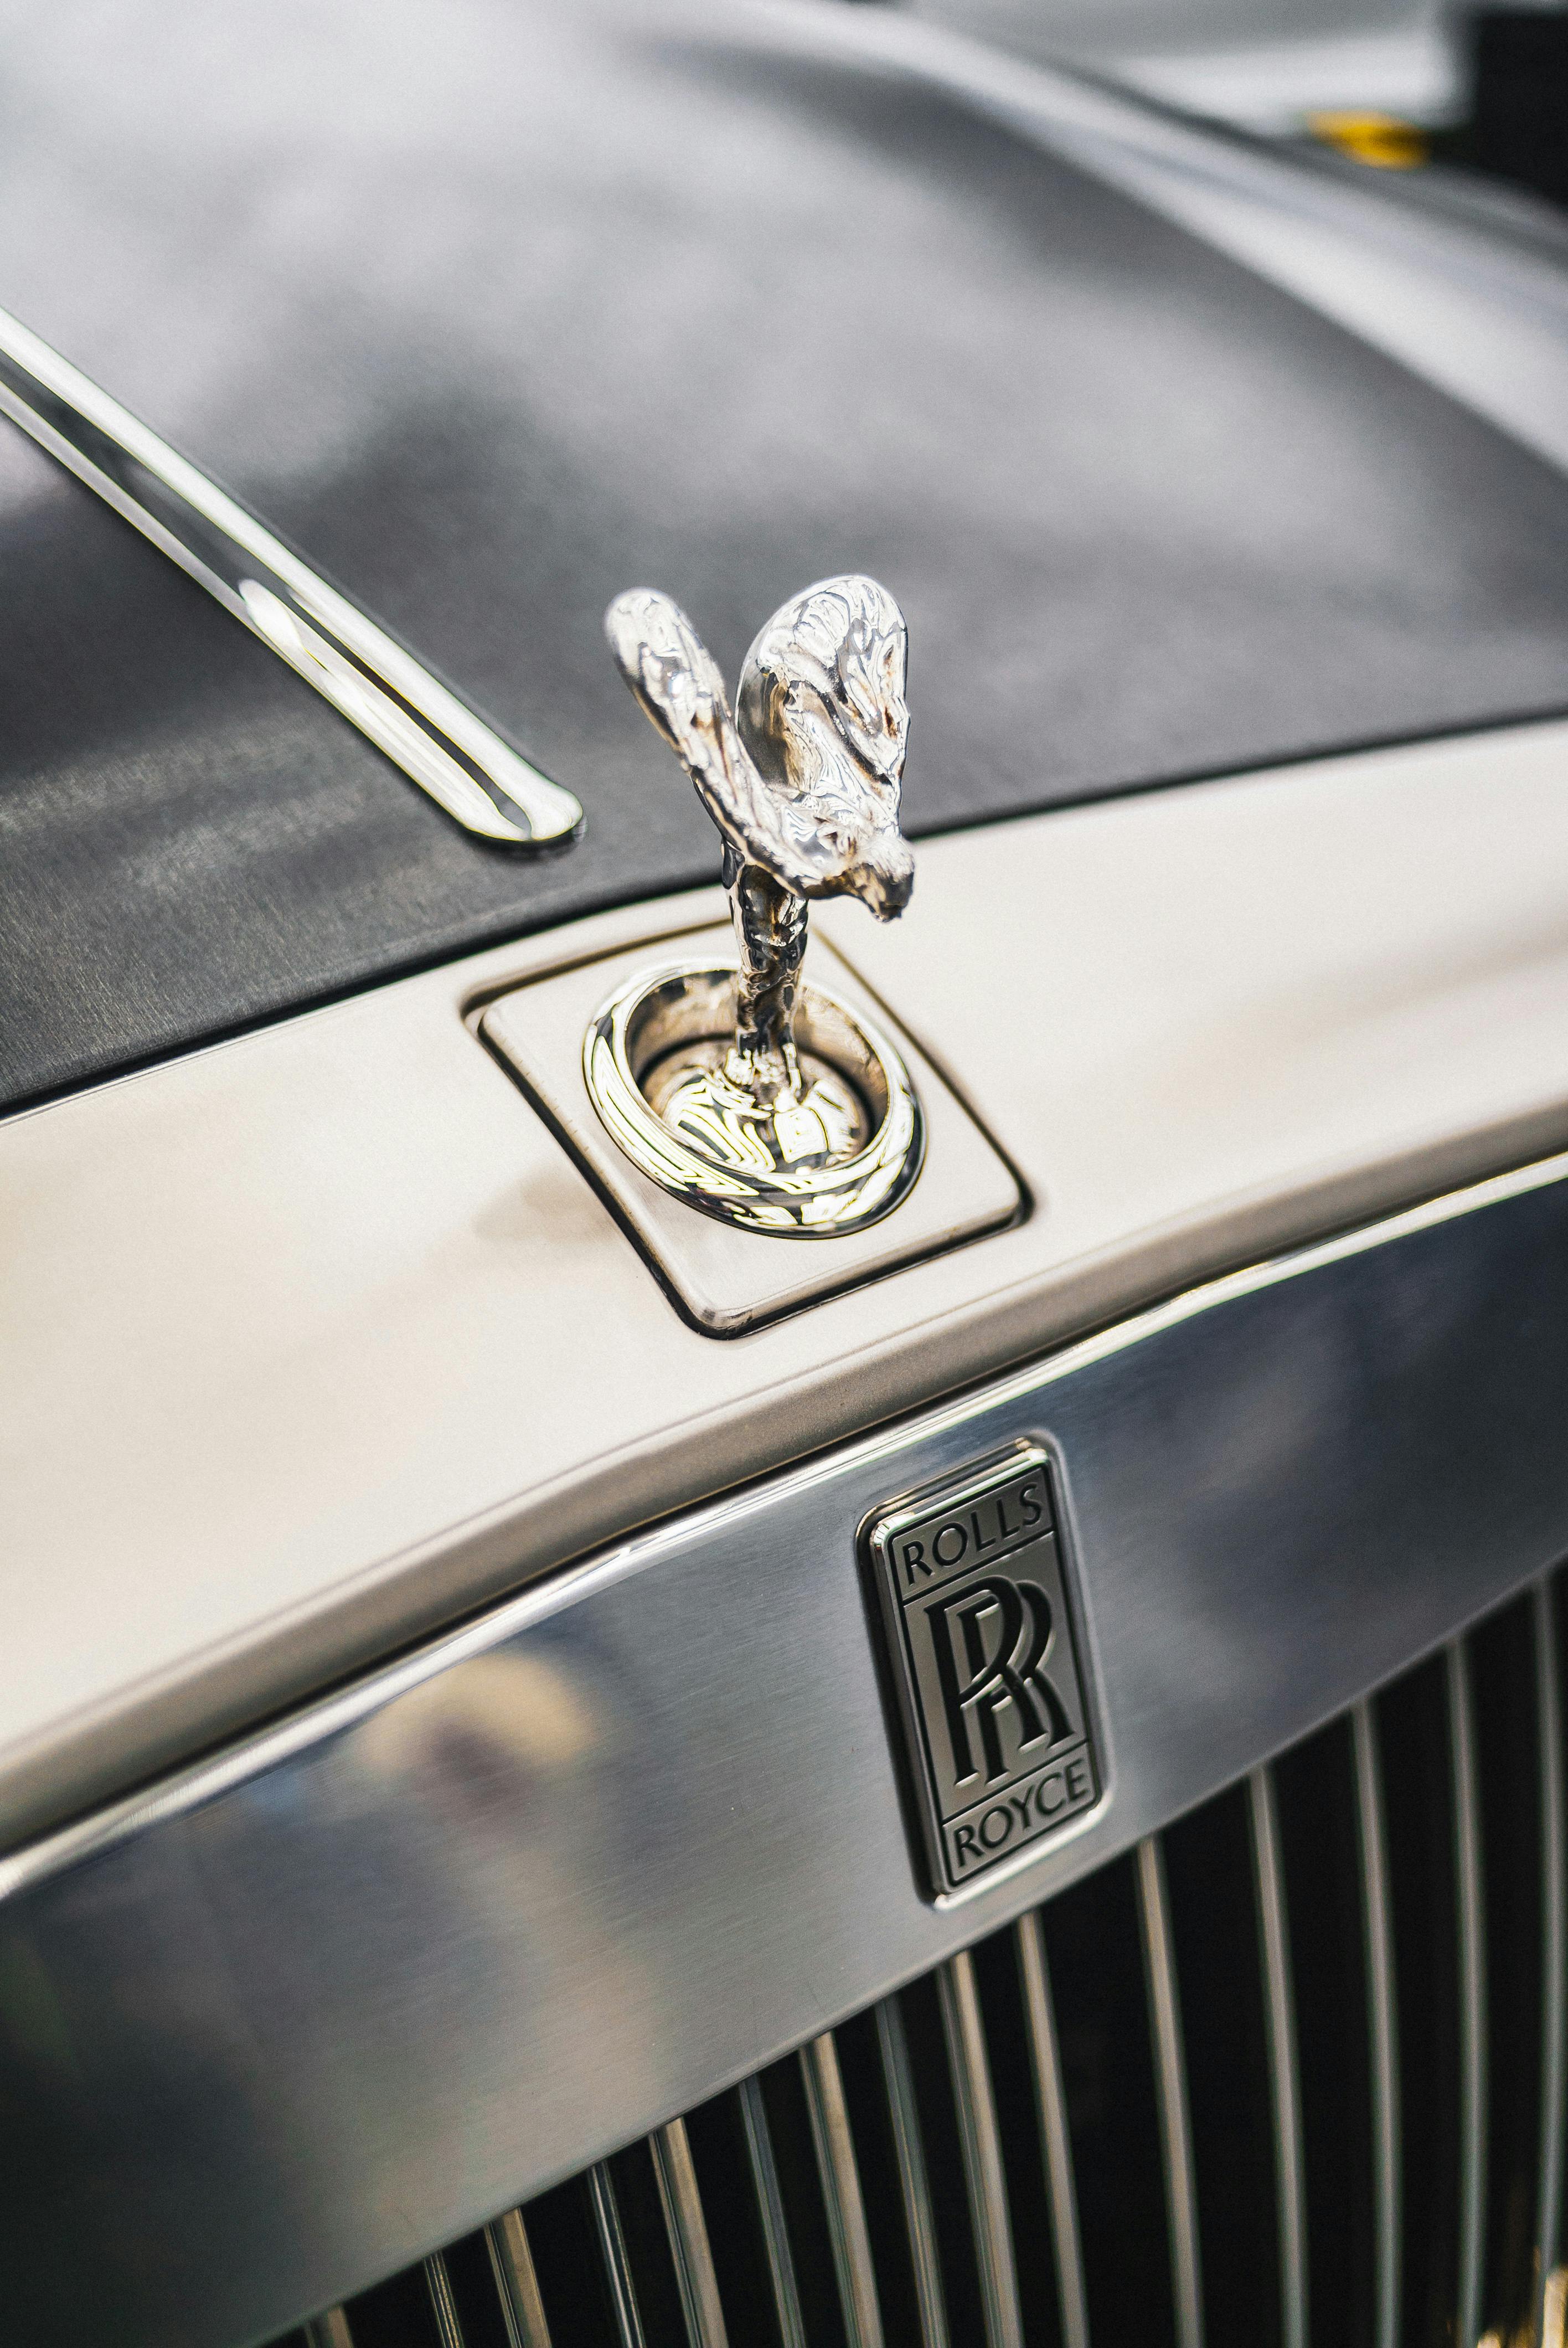 Rolls-Royce Motor Cars Archives - Deluxe Vietnam